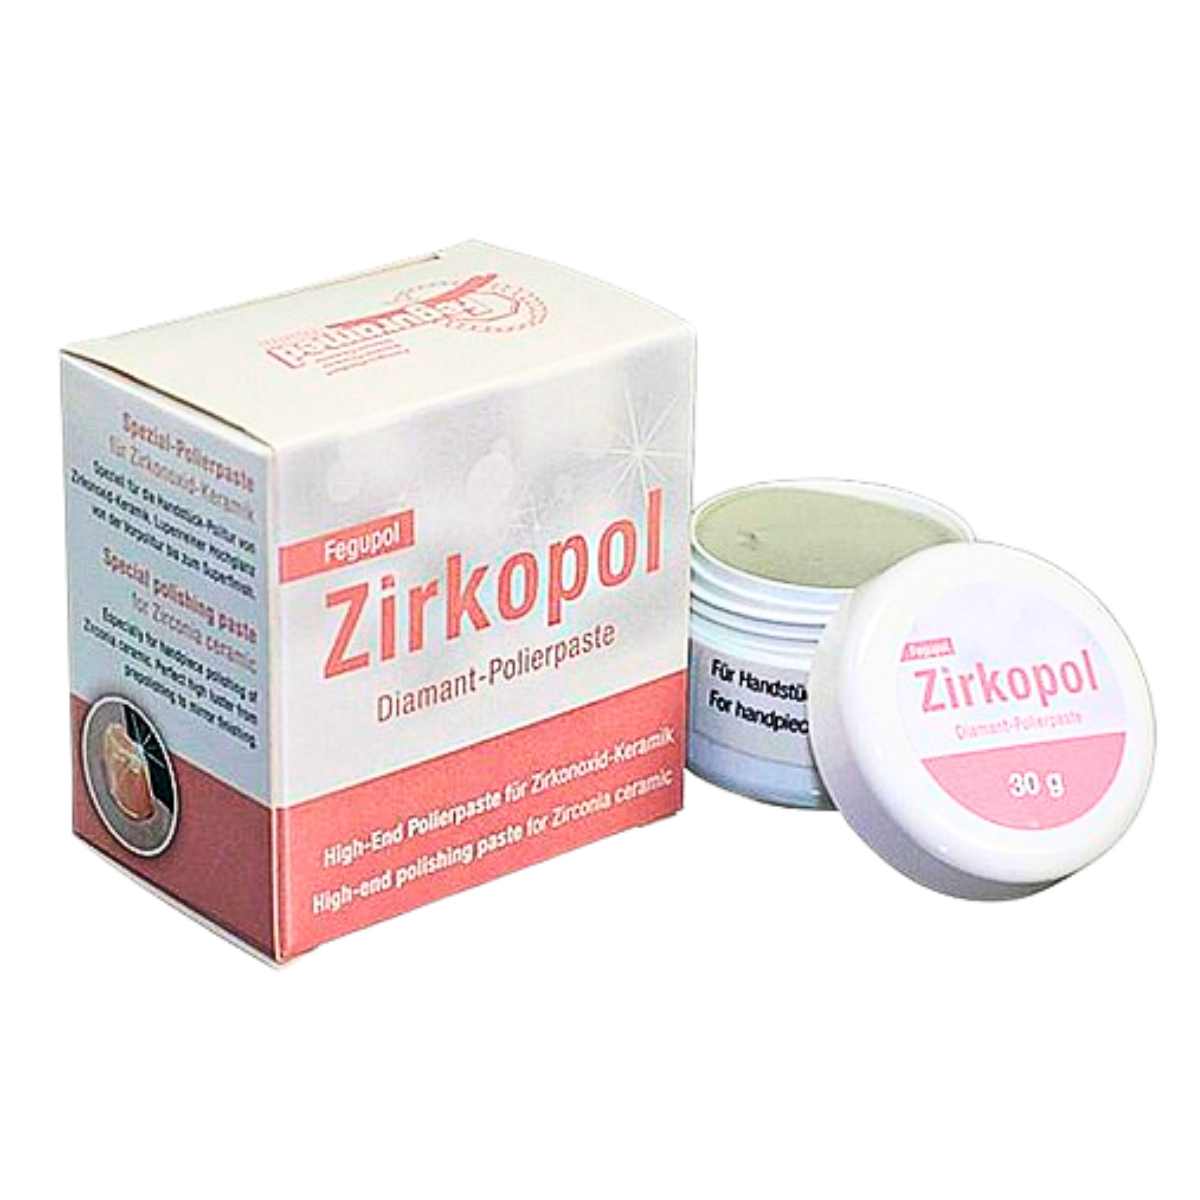 Feguramed Zirkopol Diamond Polishing Paste